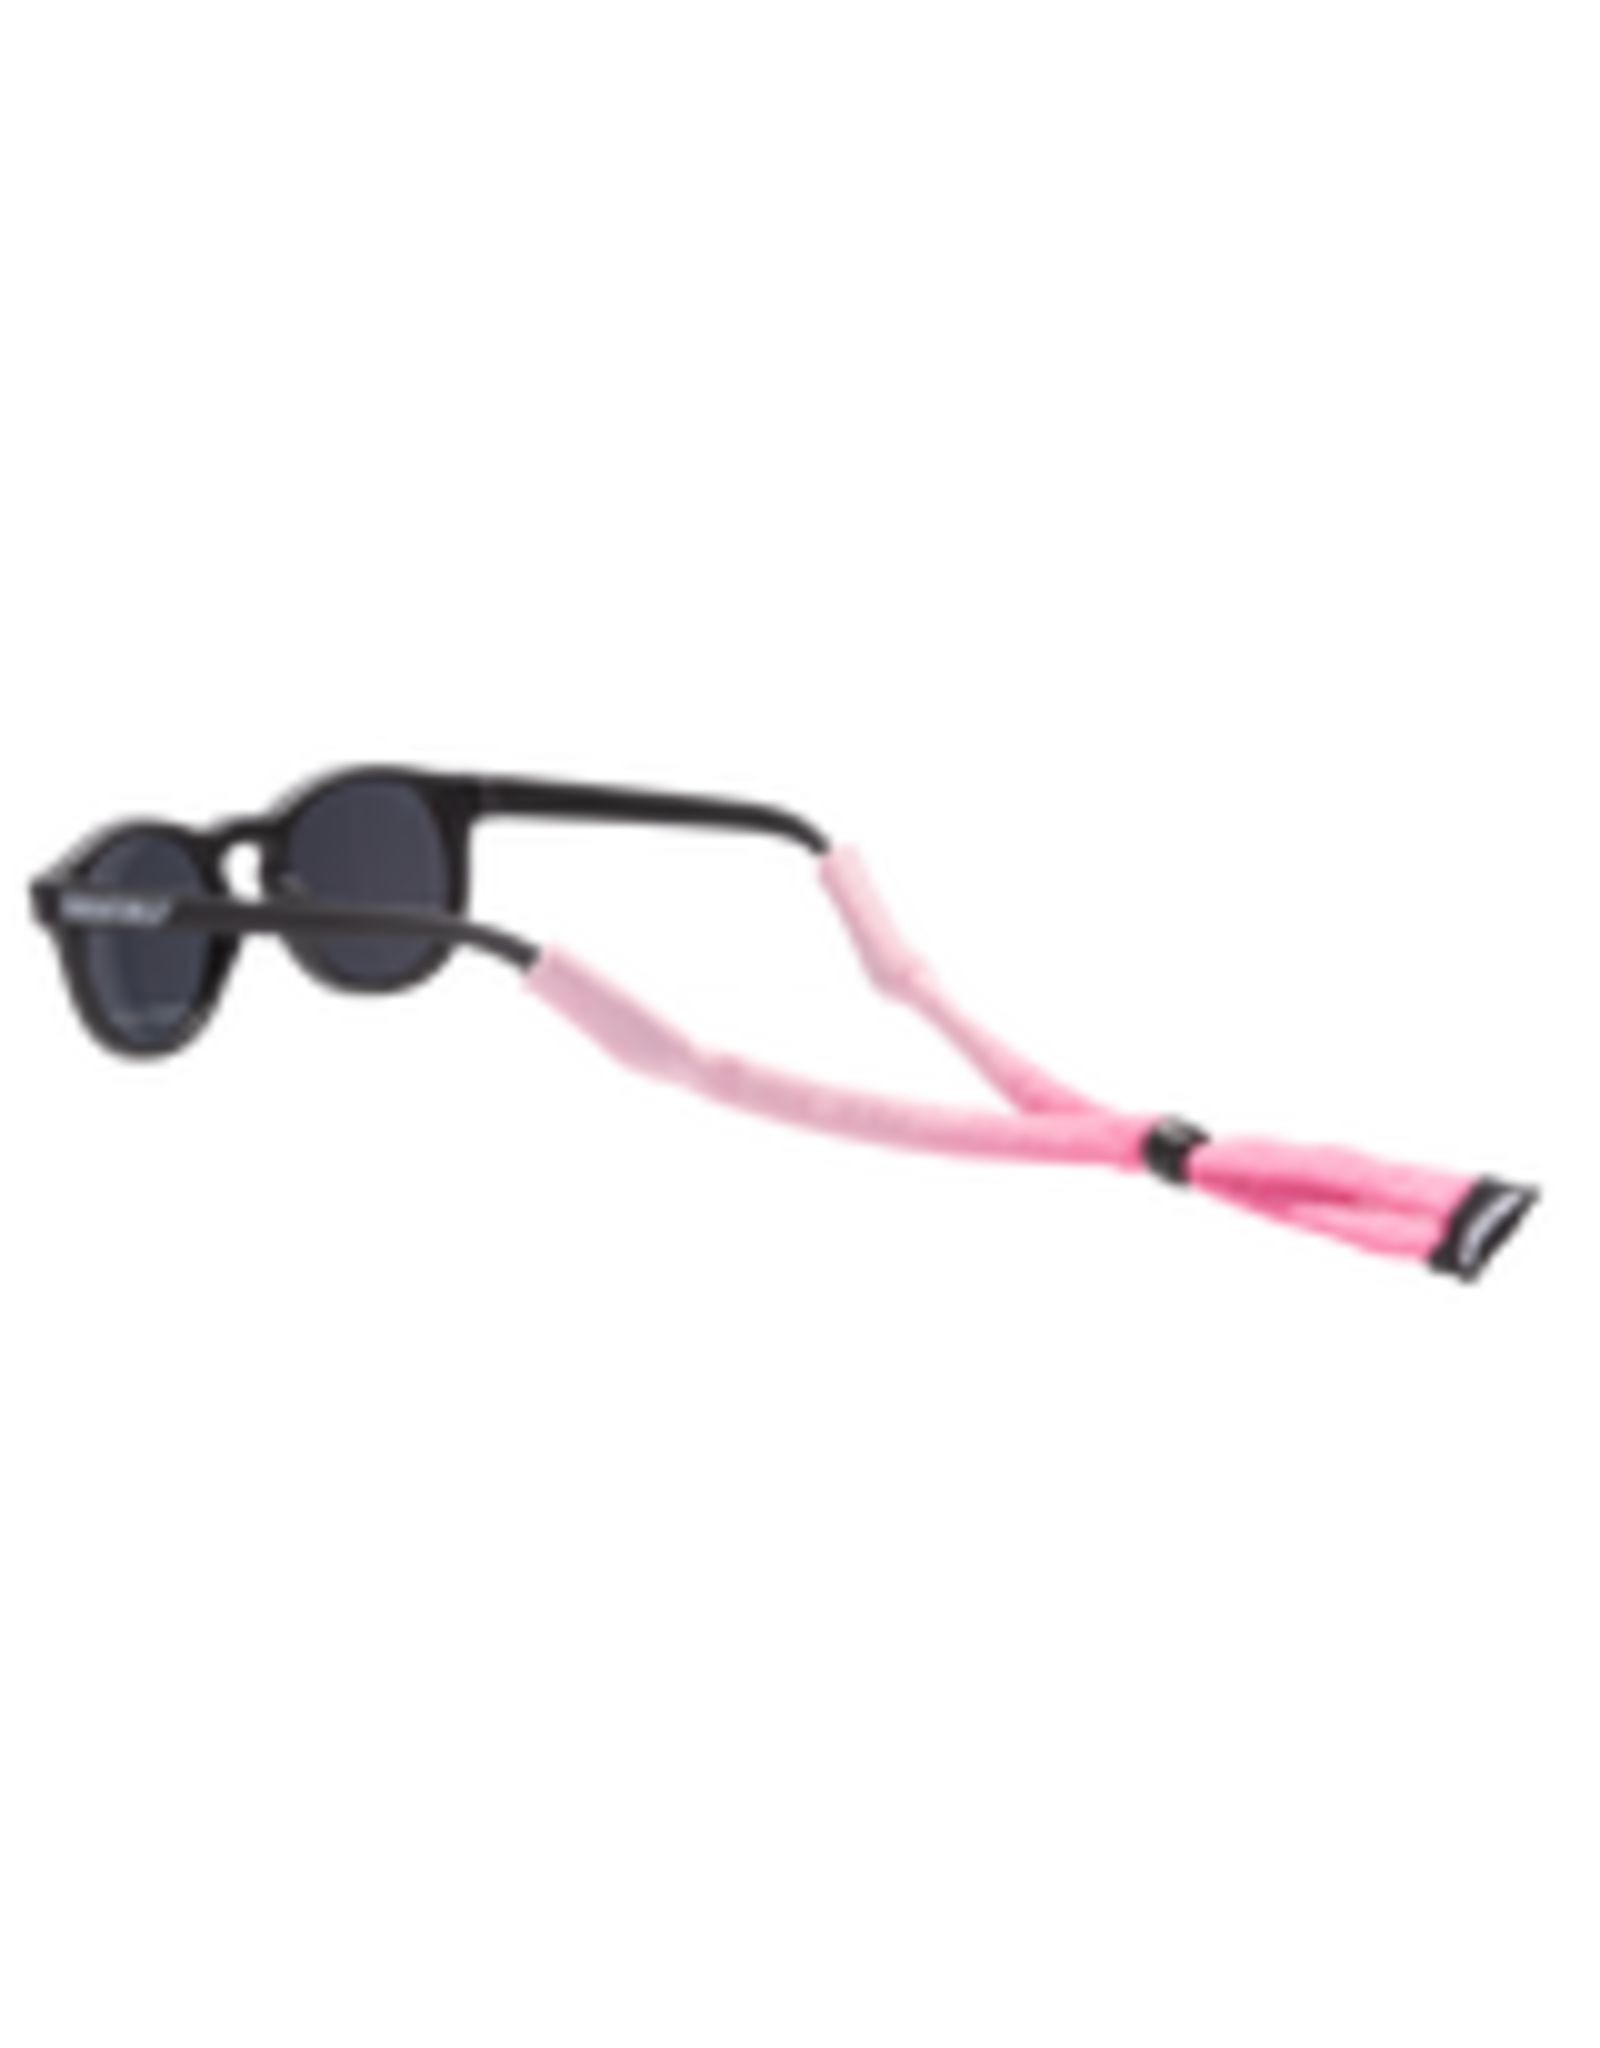 Babiators Fabric Sunglasses Strap: Pink Ombre